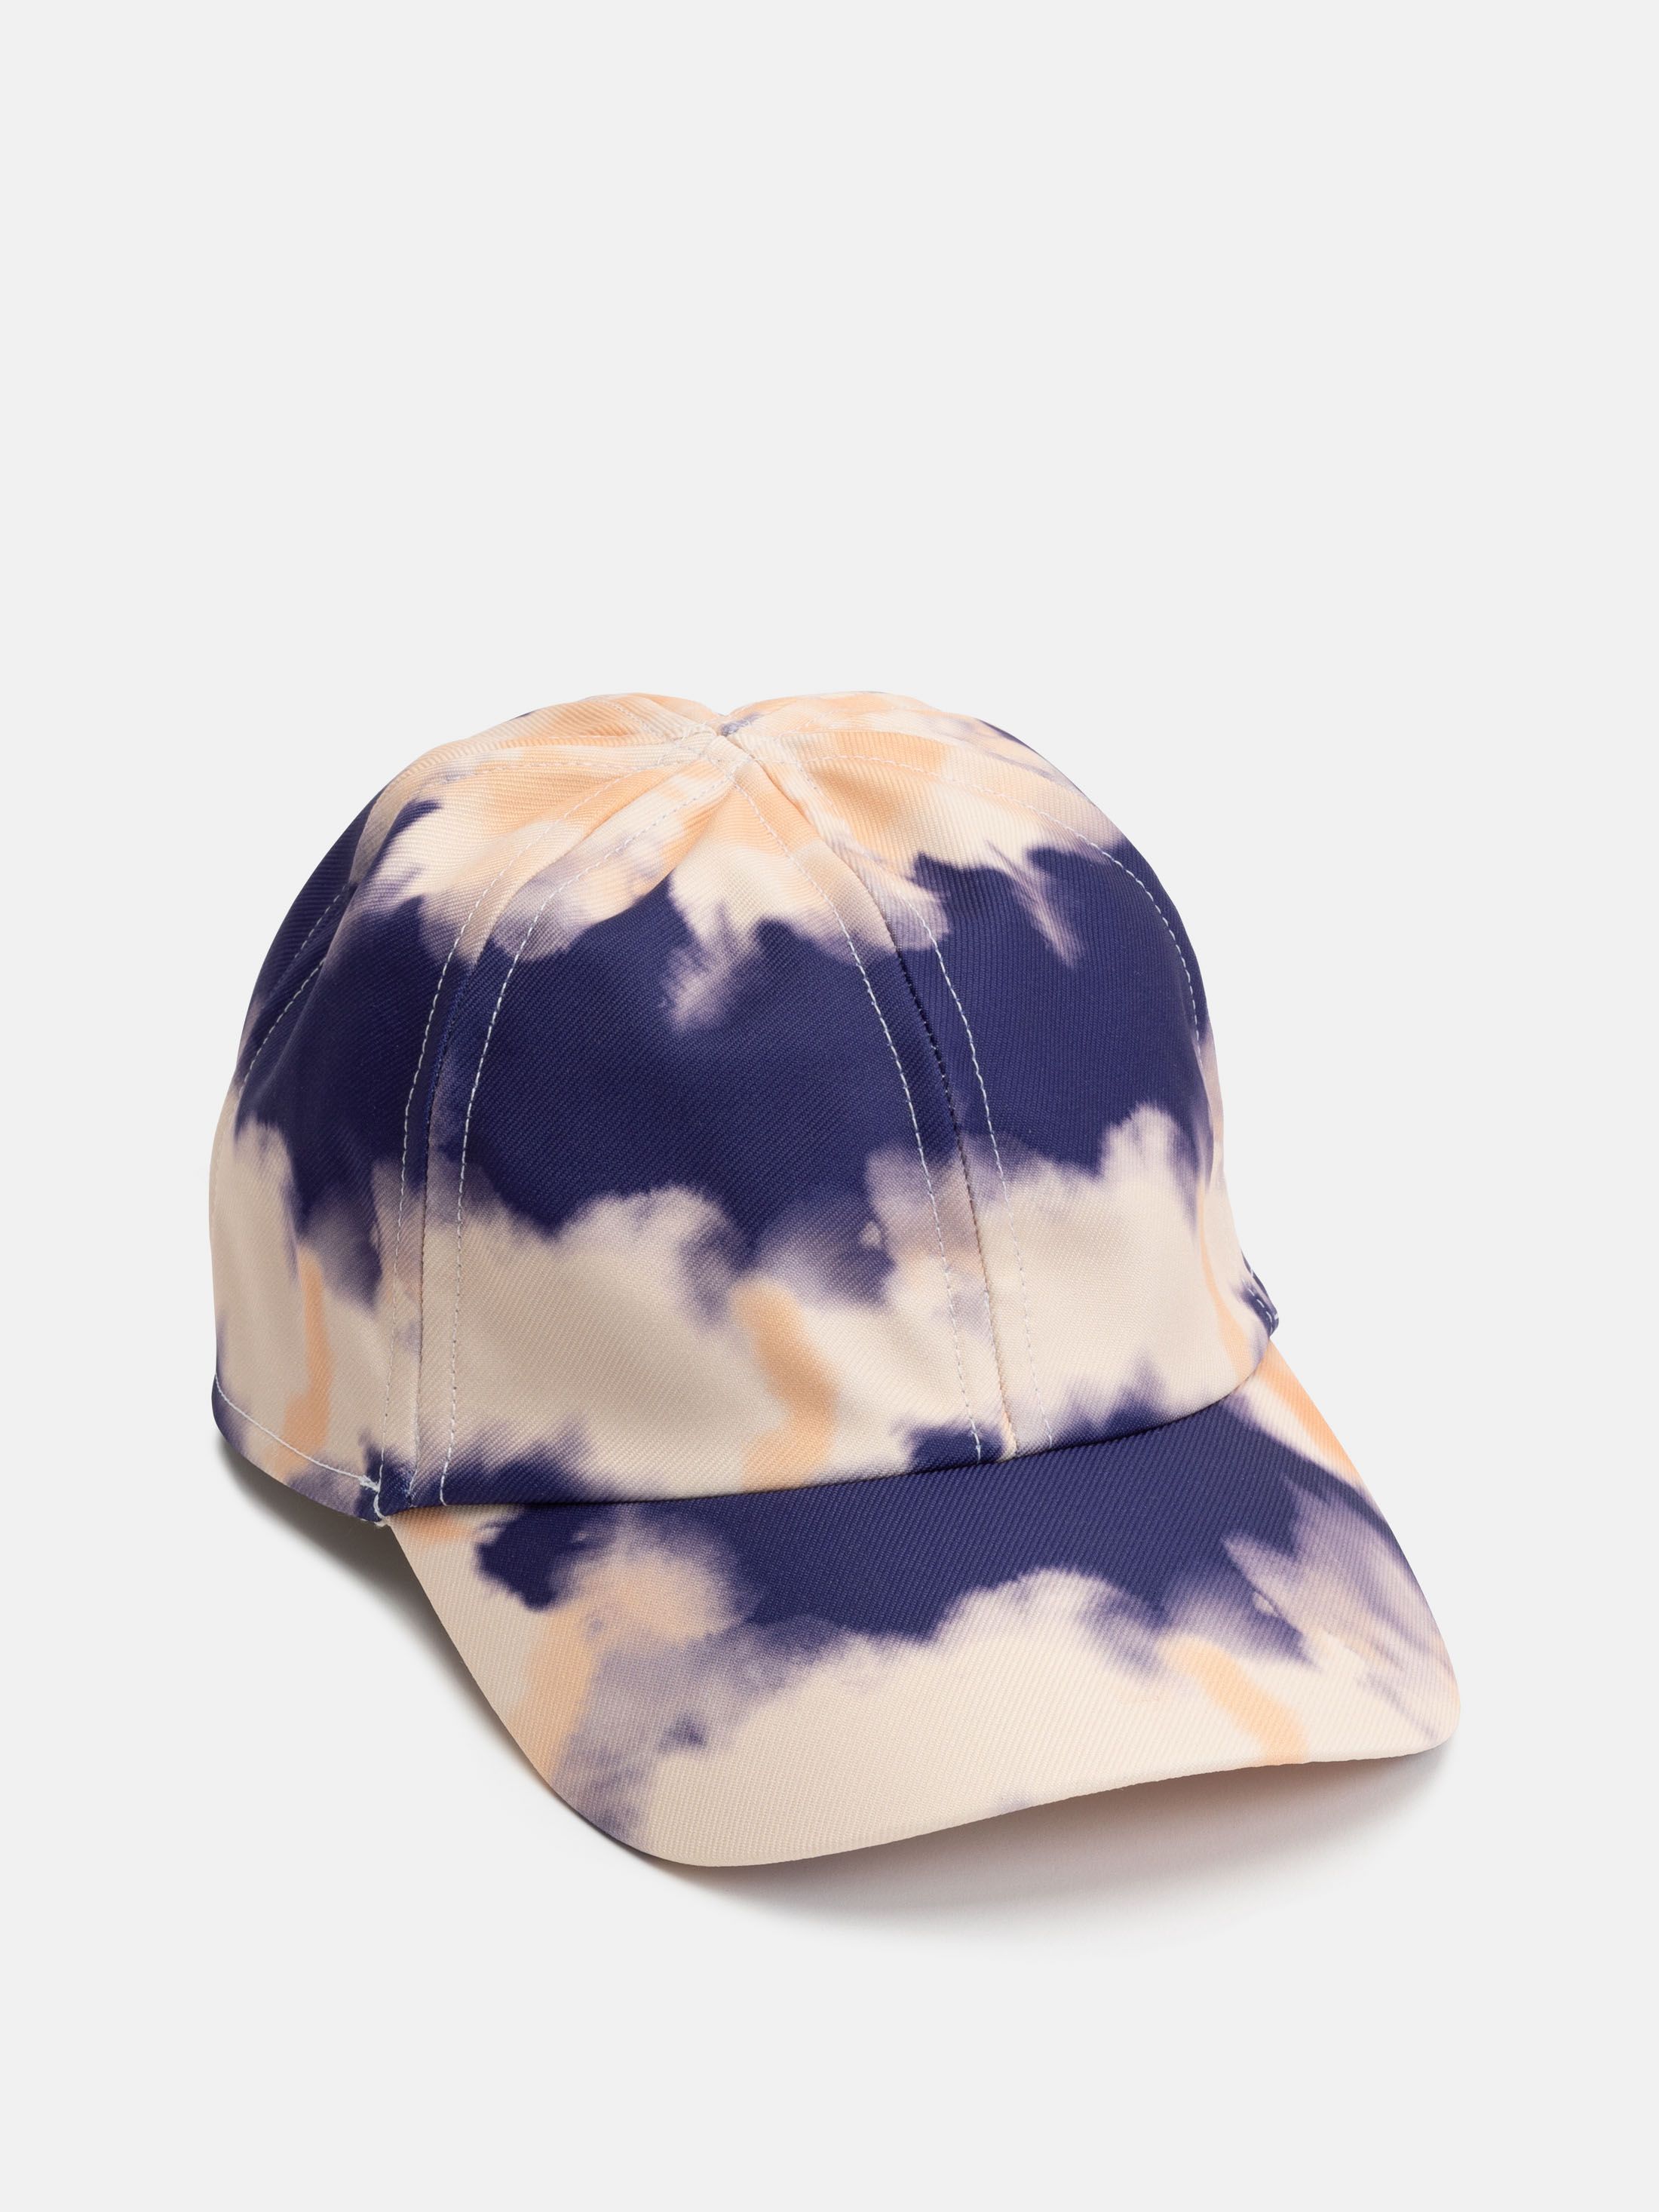 Gorras personalizadas online